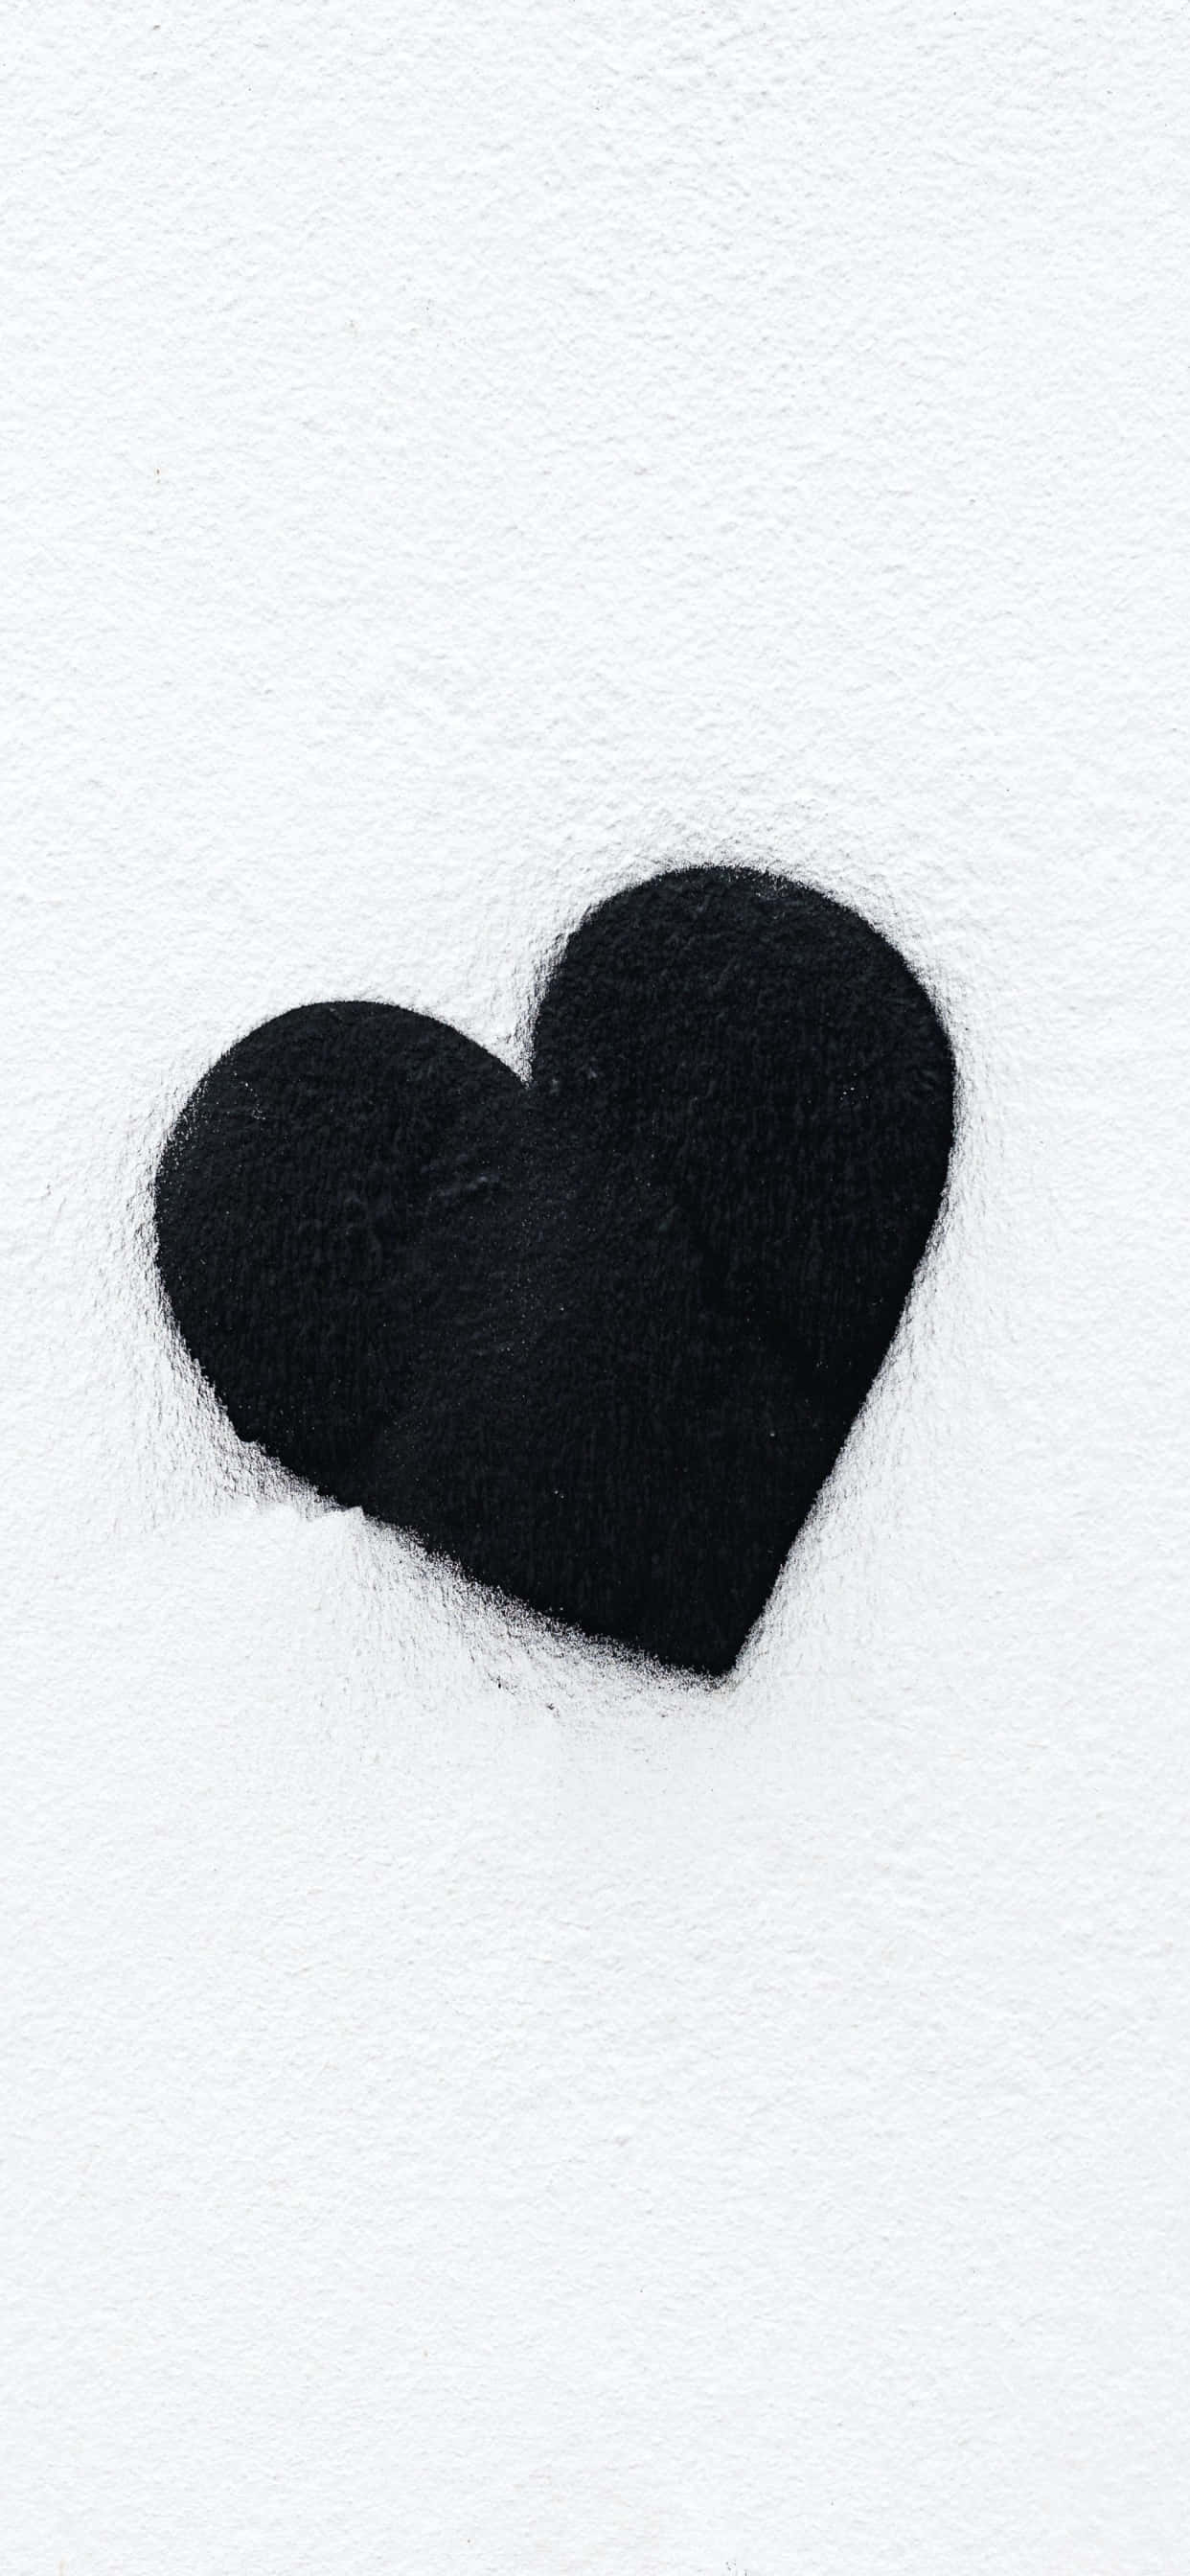 Captivating Black and White Heart Background